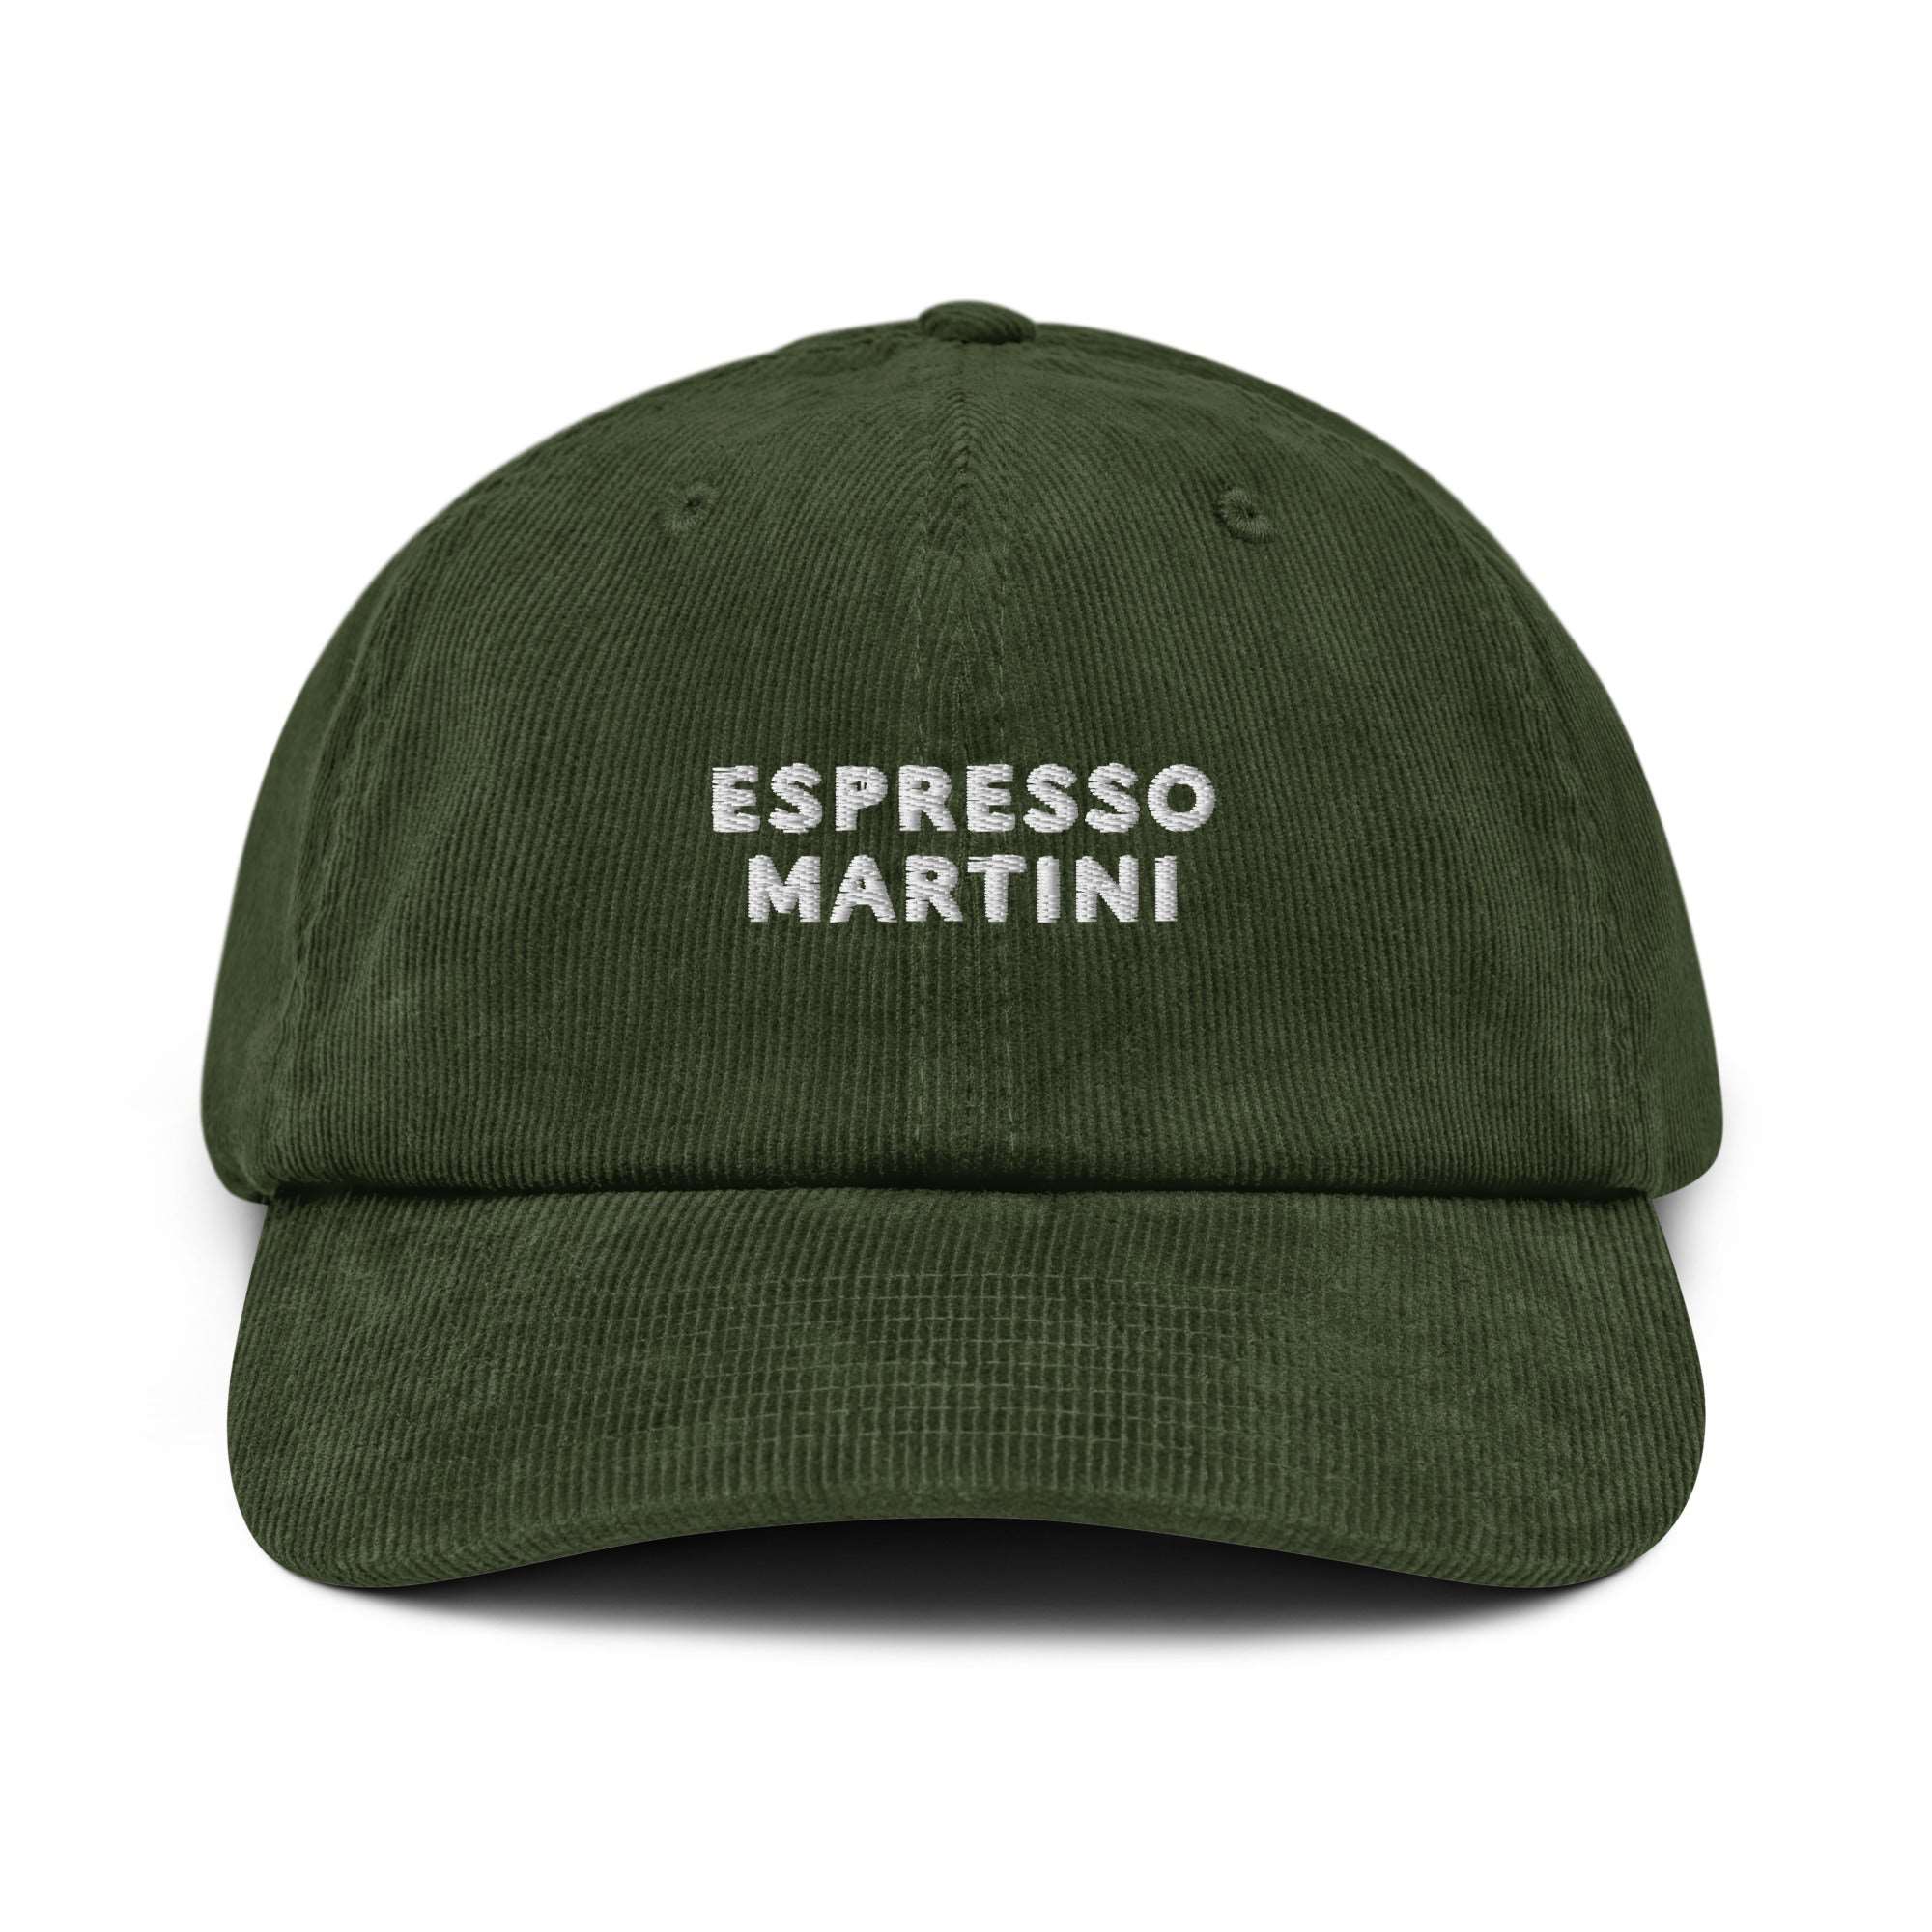 Espresso Martini - Corduroy Cap - The Refined Spirit